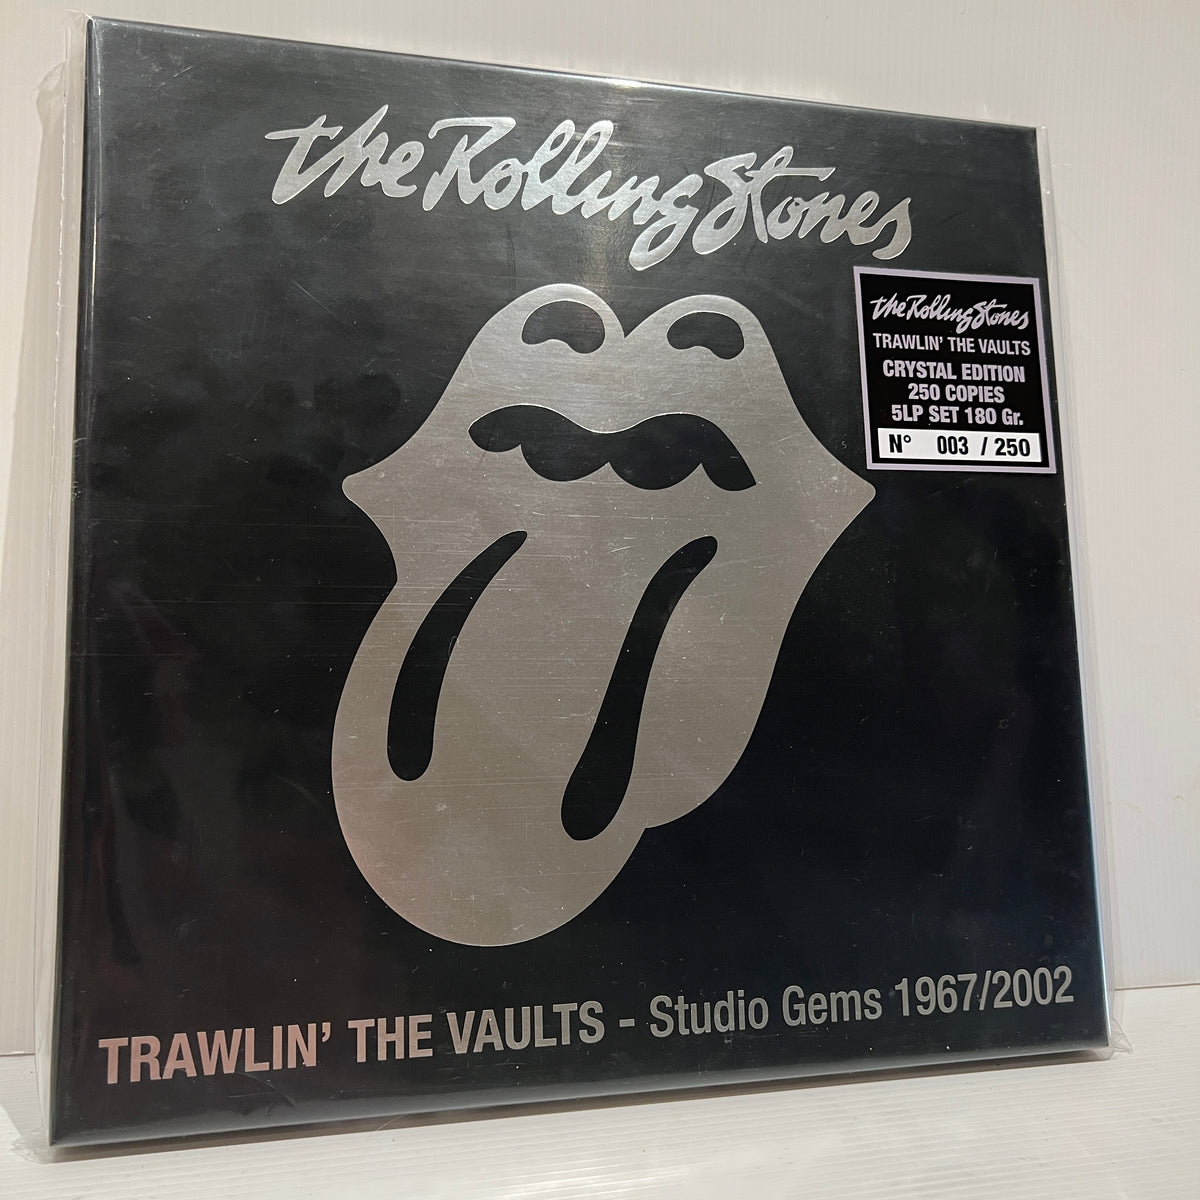 The Rolling Stones - Trawlin' the Vaults. Studio Gems 1967/2002 - rare